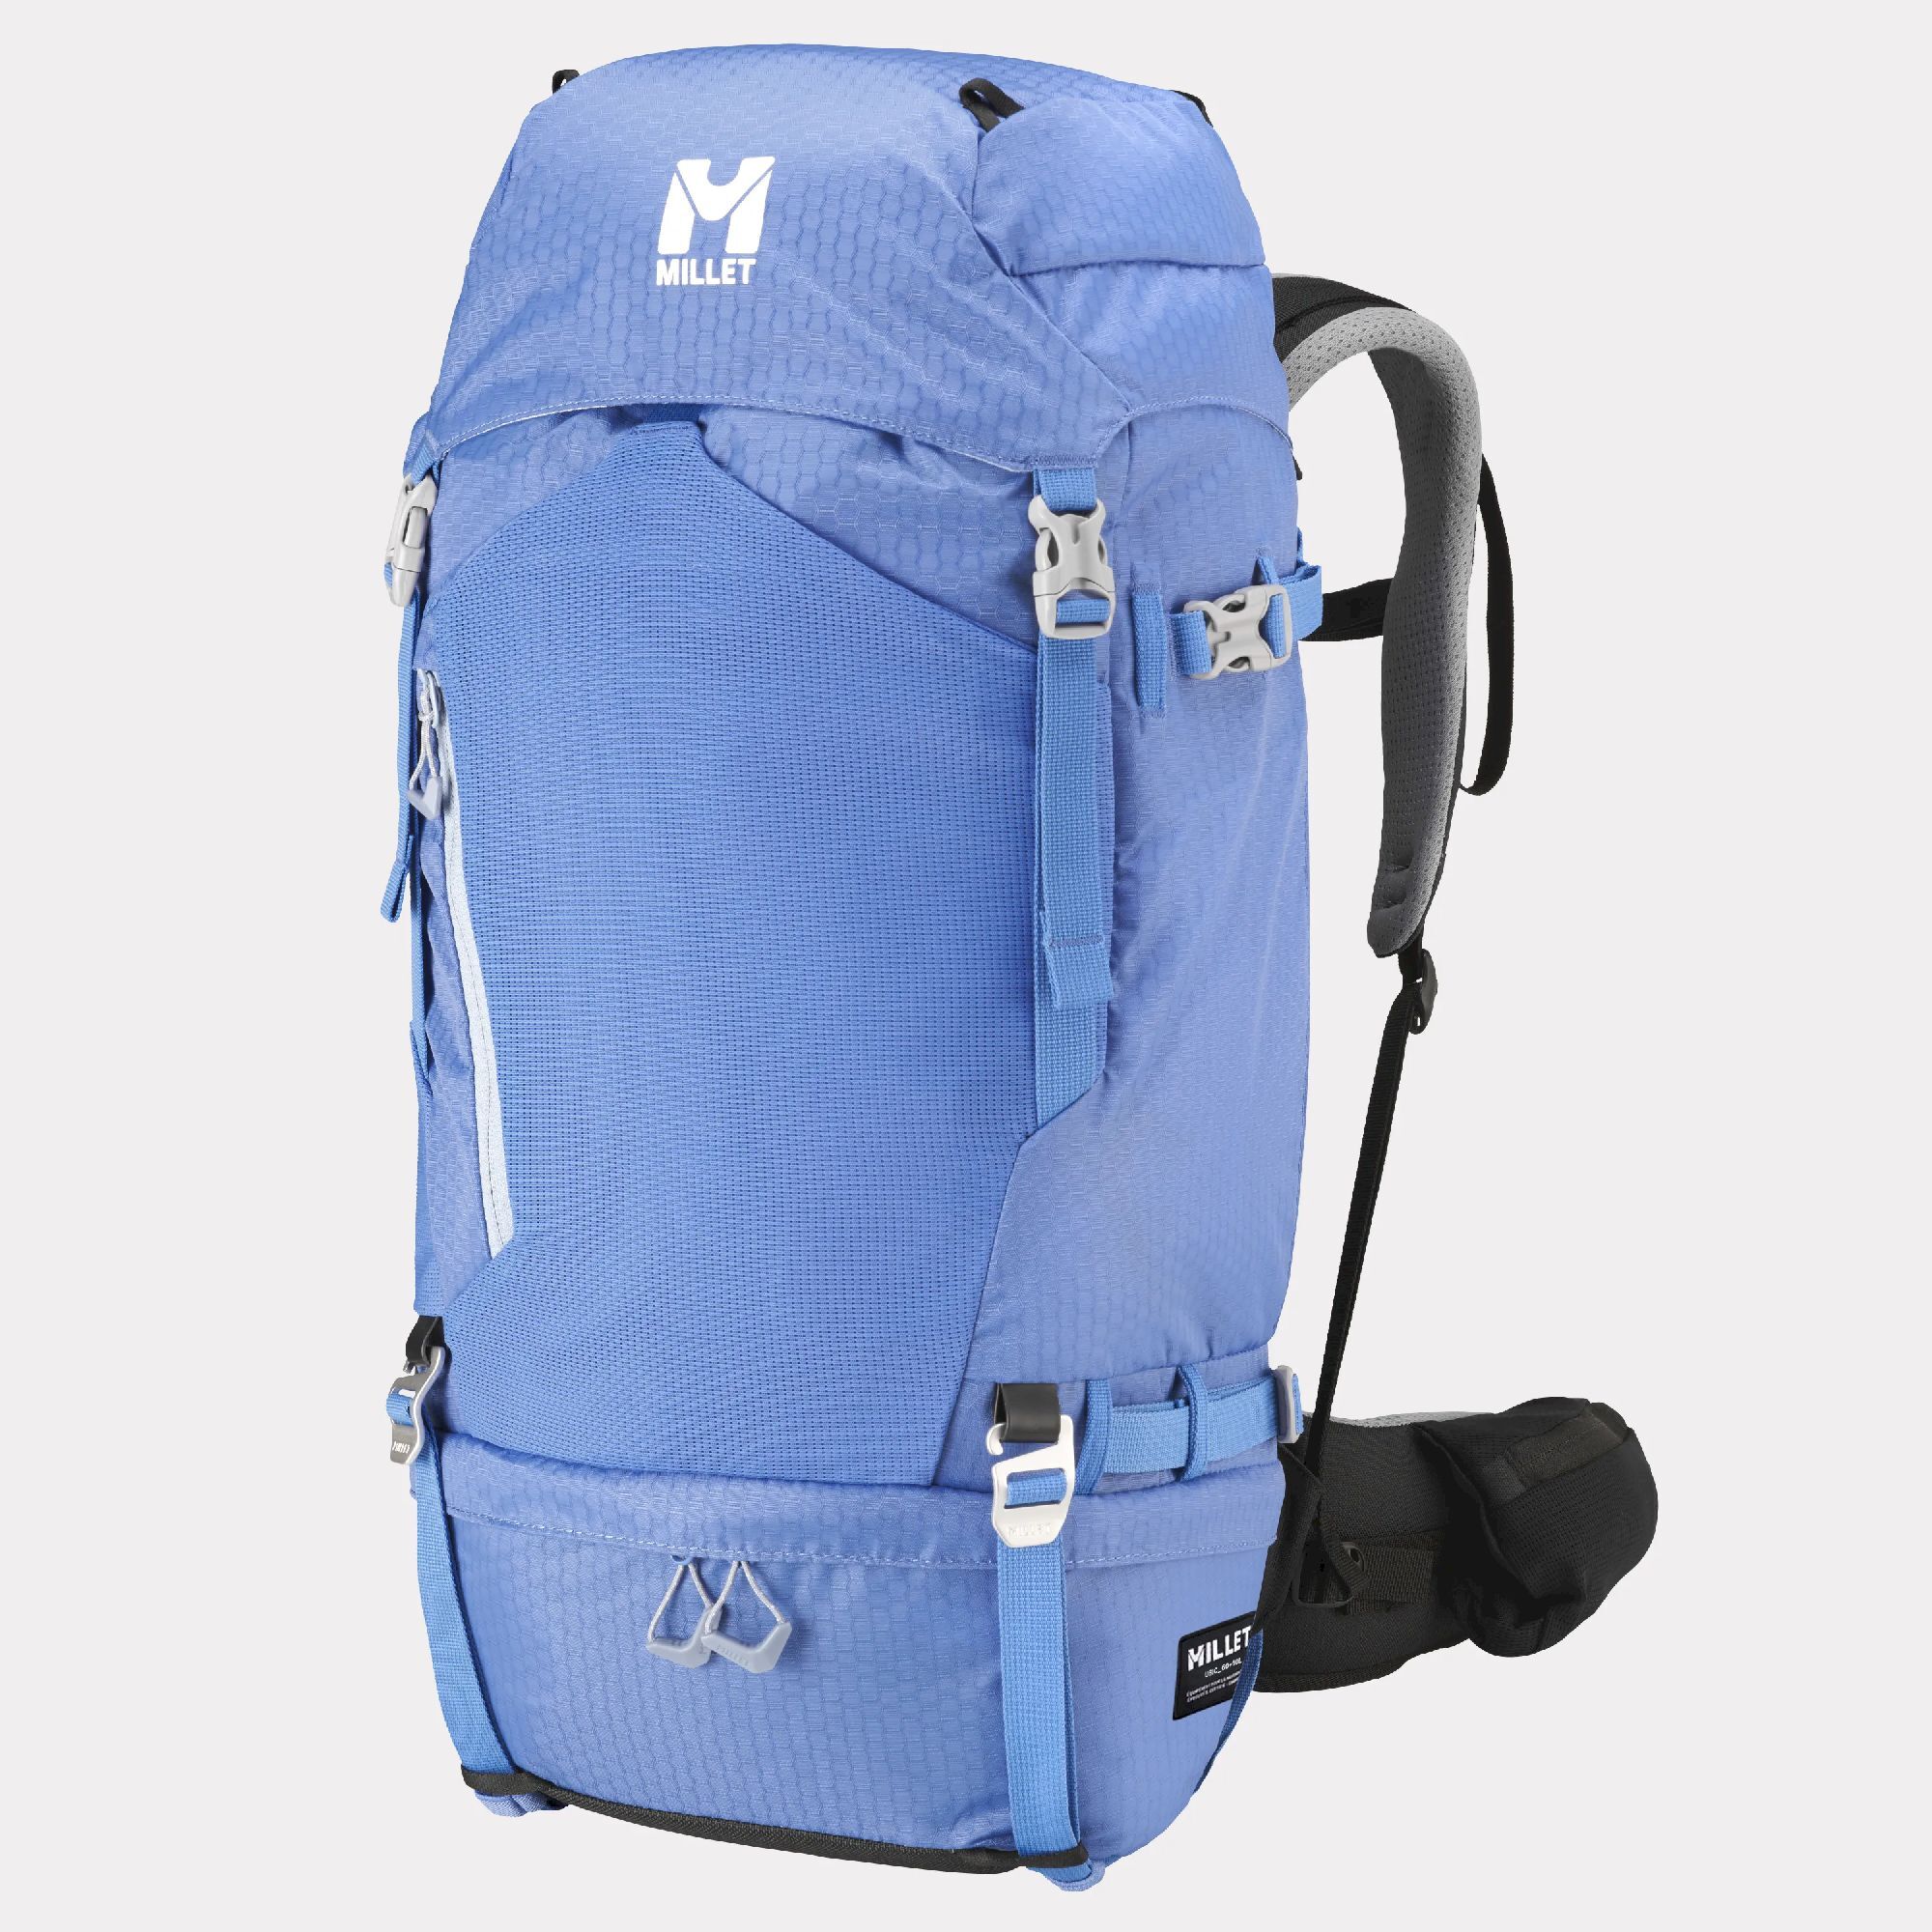 Millet Ubic 40 - Hiking backpack - Women's